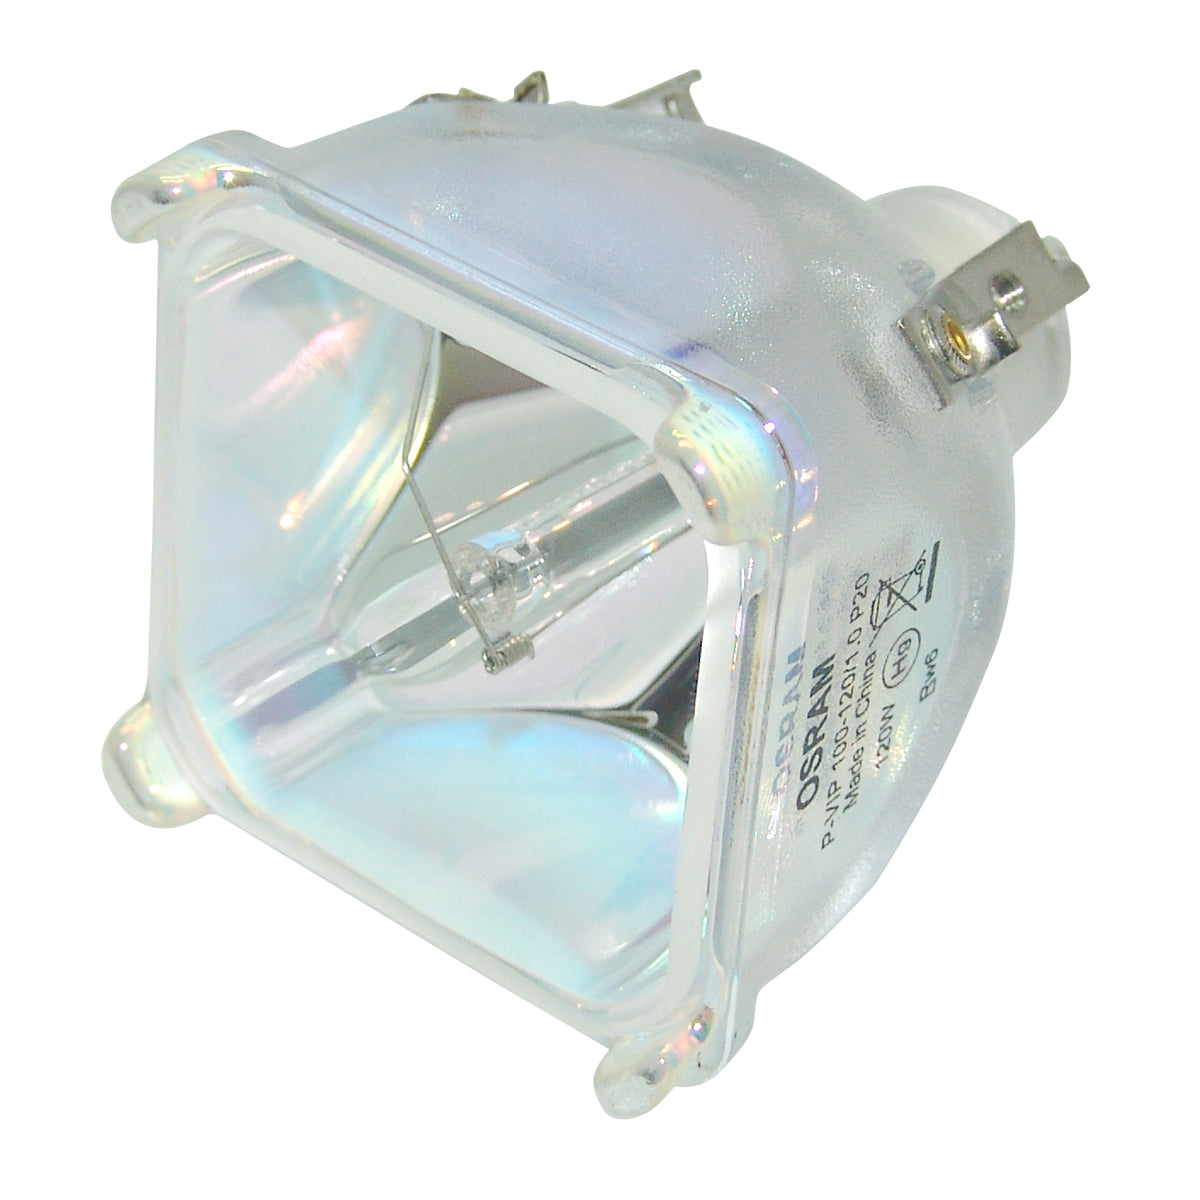 3M 78-6969-9463-7 Osram Projector Bare Lamp